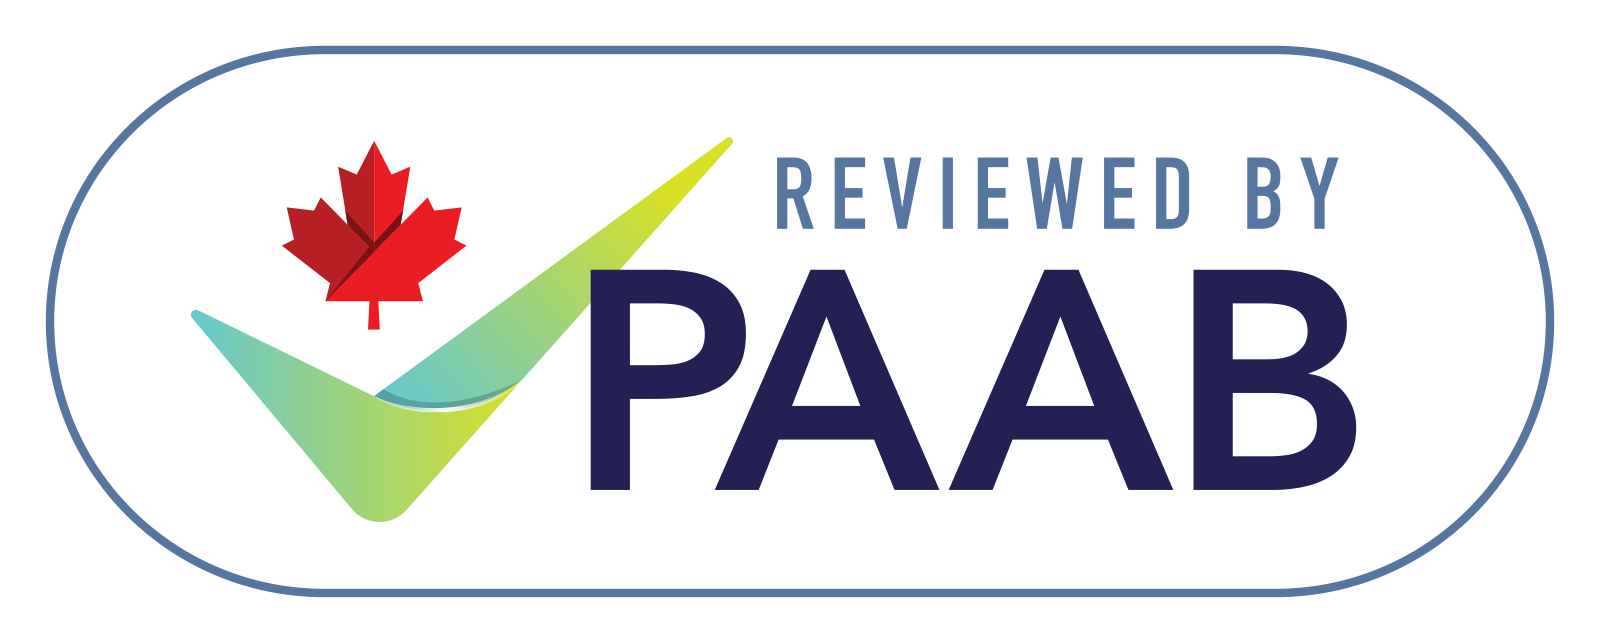 Logo - Pharmaceutical Advertising Advisory Board (PAAB)